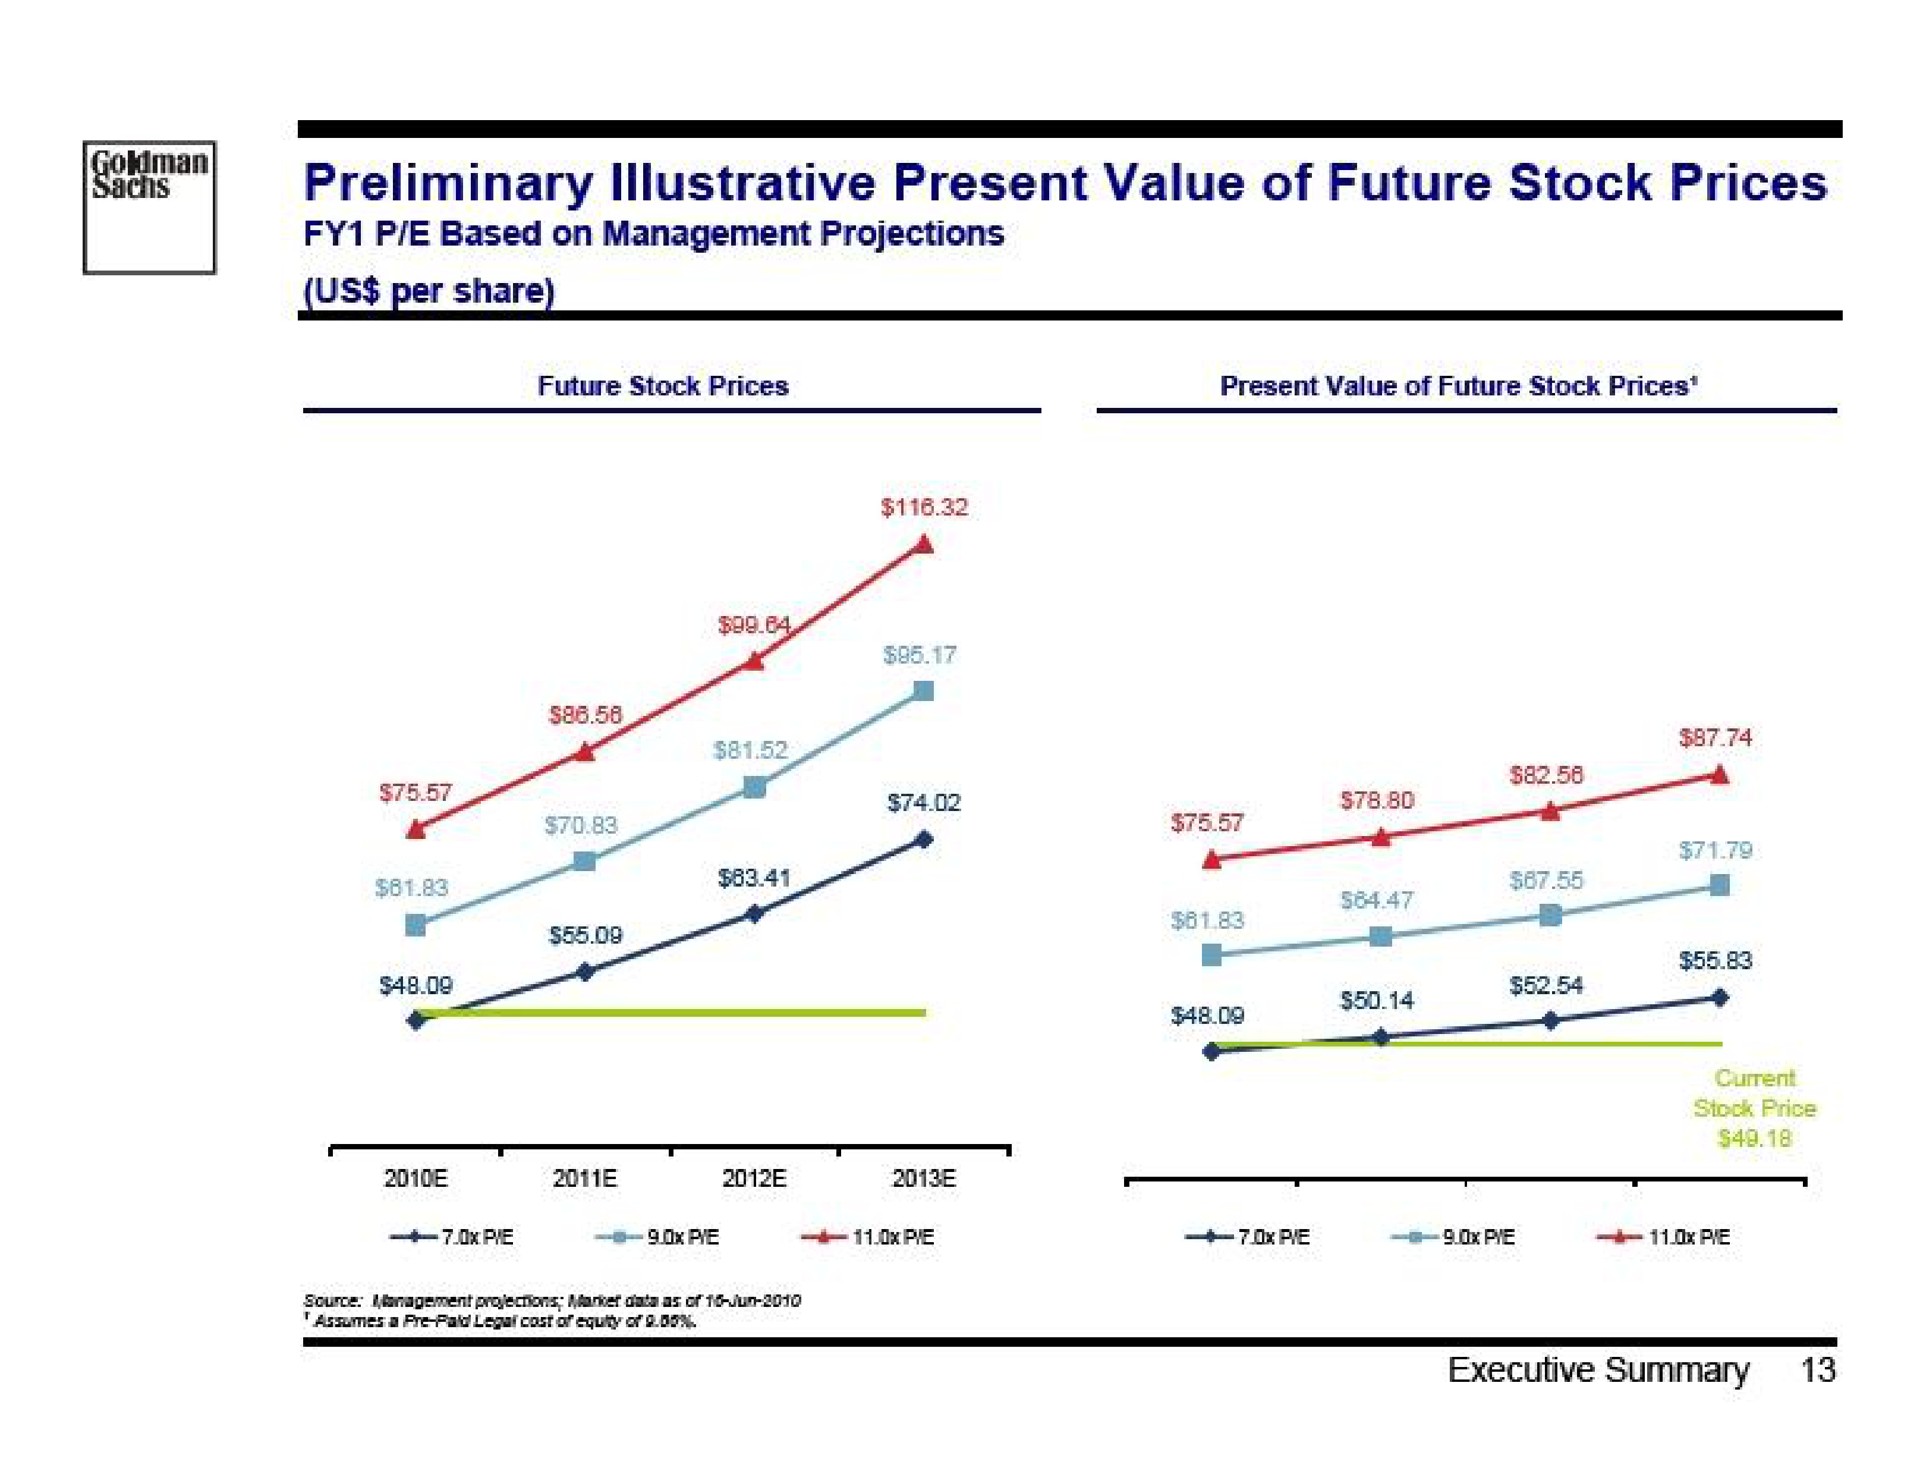 preliminary illustrative present value of future stock prices | Goldman Sachs